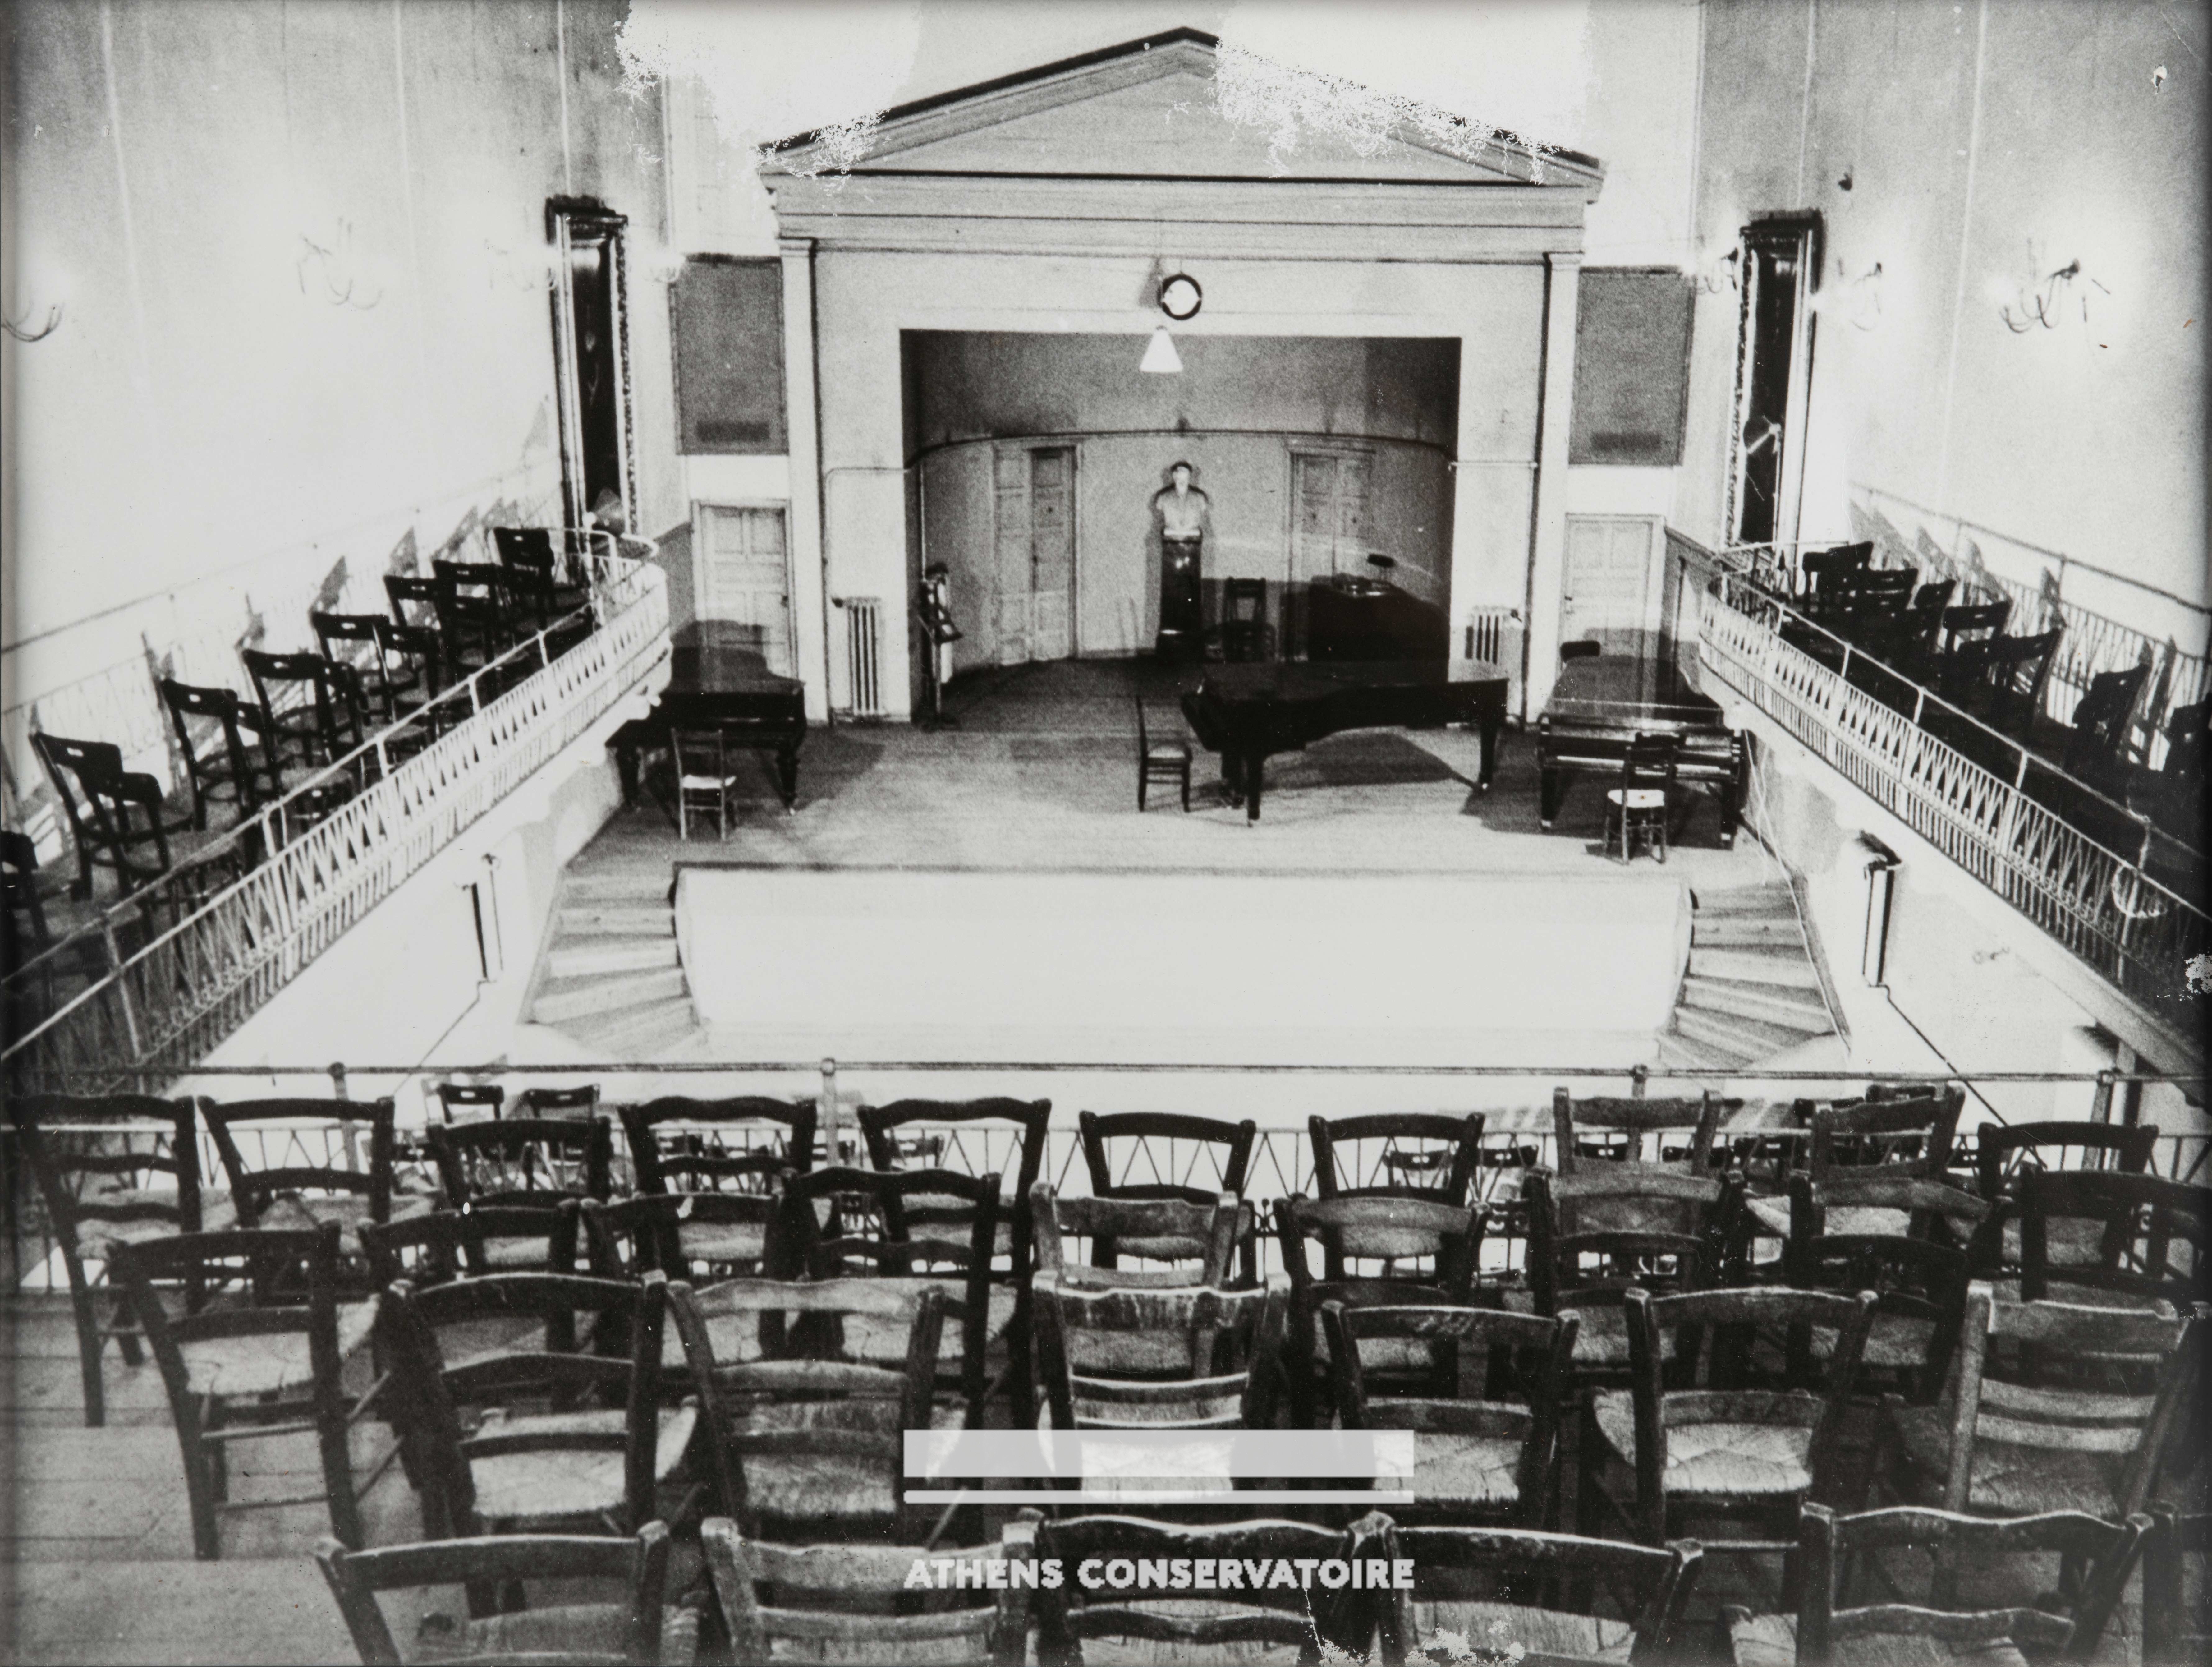 The Athens Conservatoire Historical Concert Hall (Athens Conservatoire Archives, Conservatoire Historical Archives).
